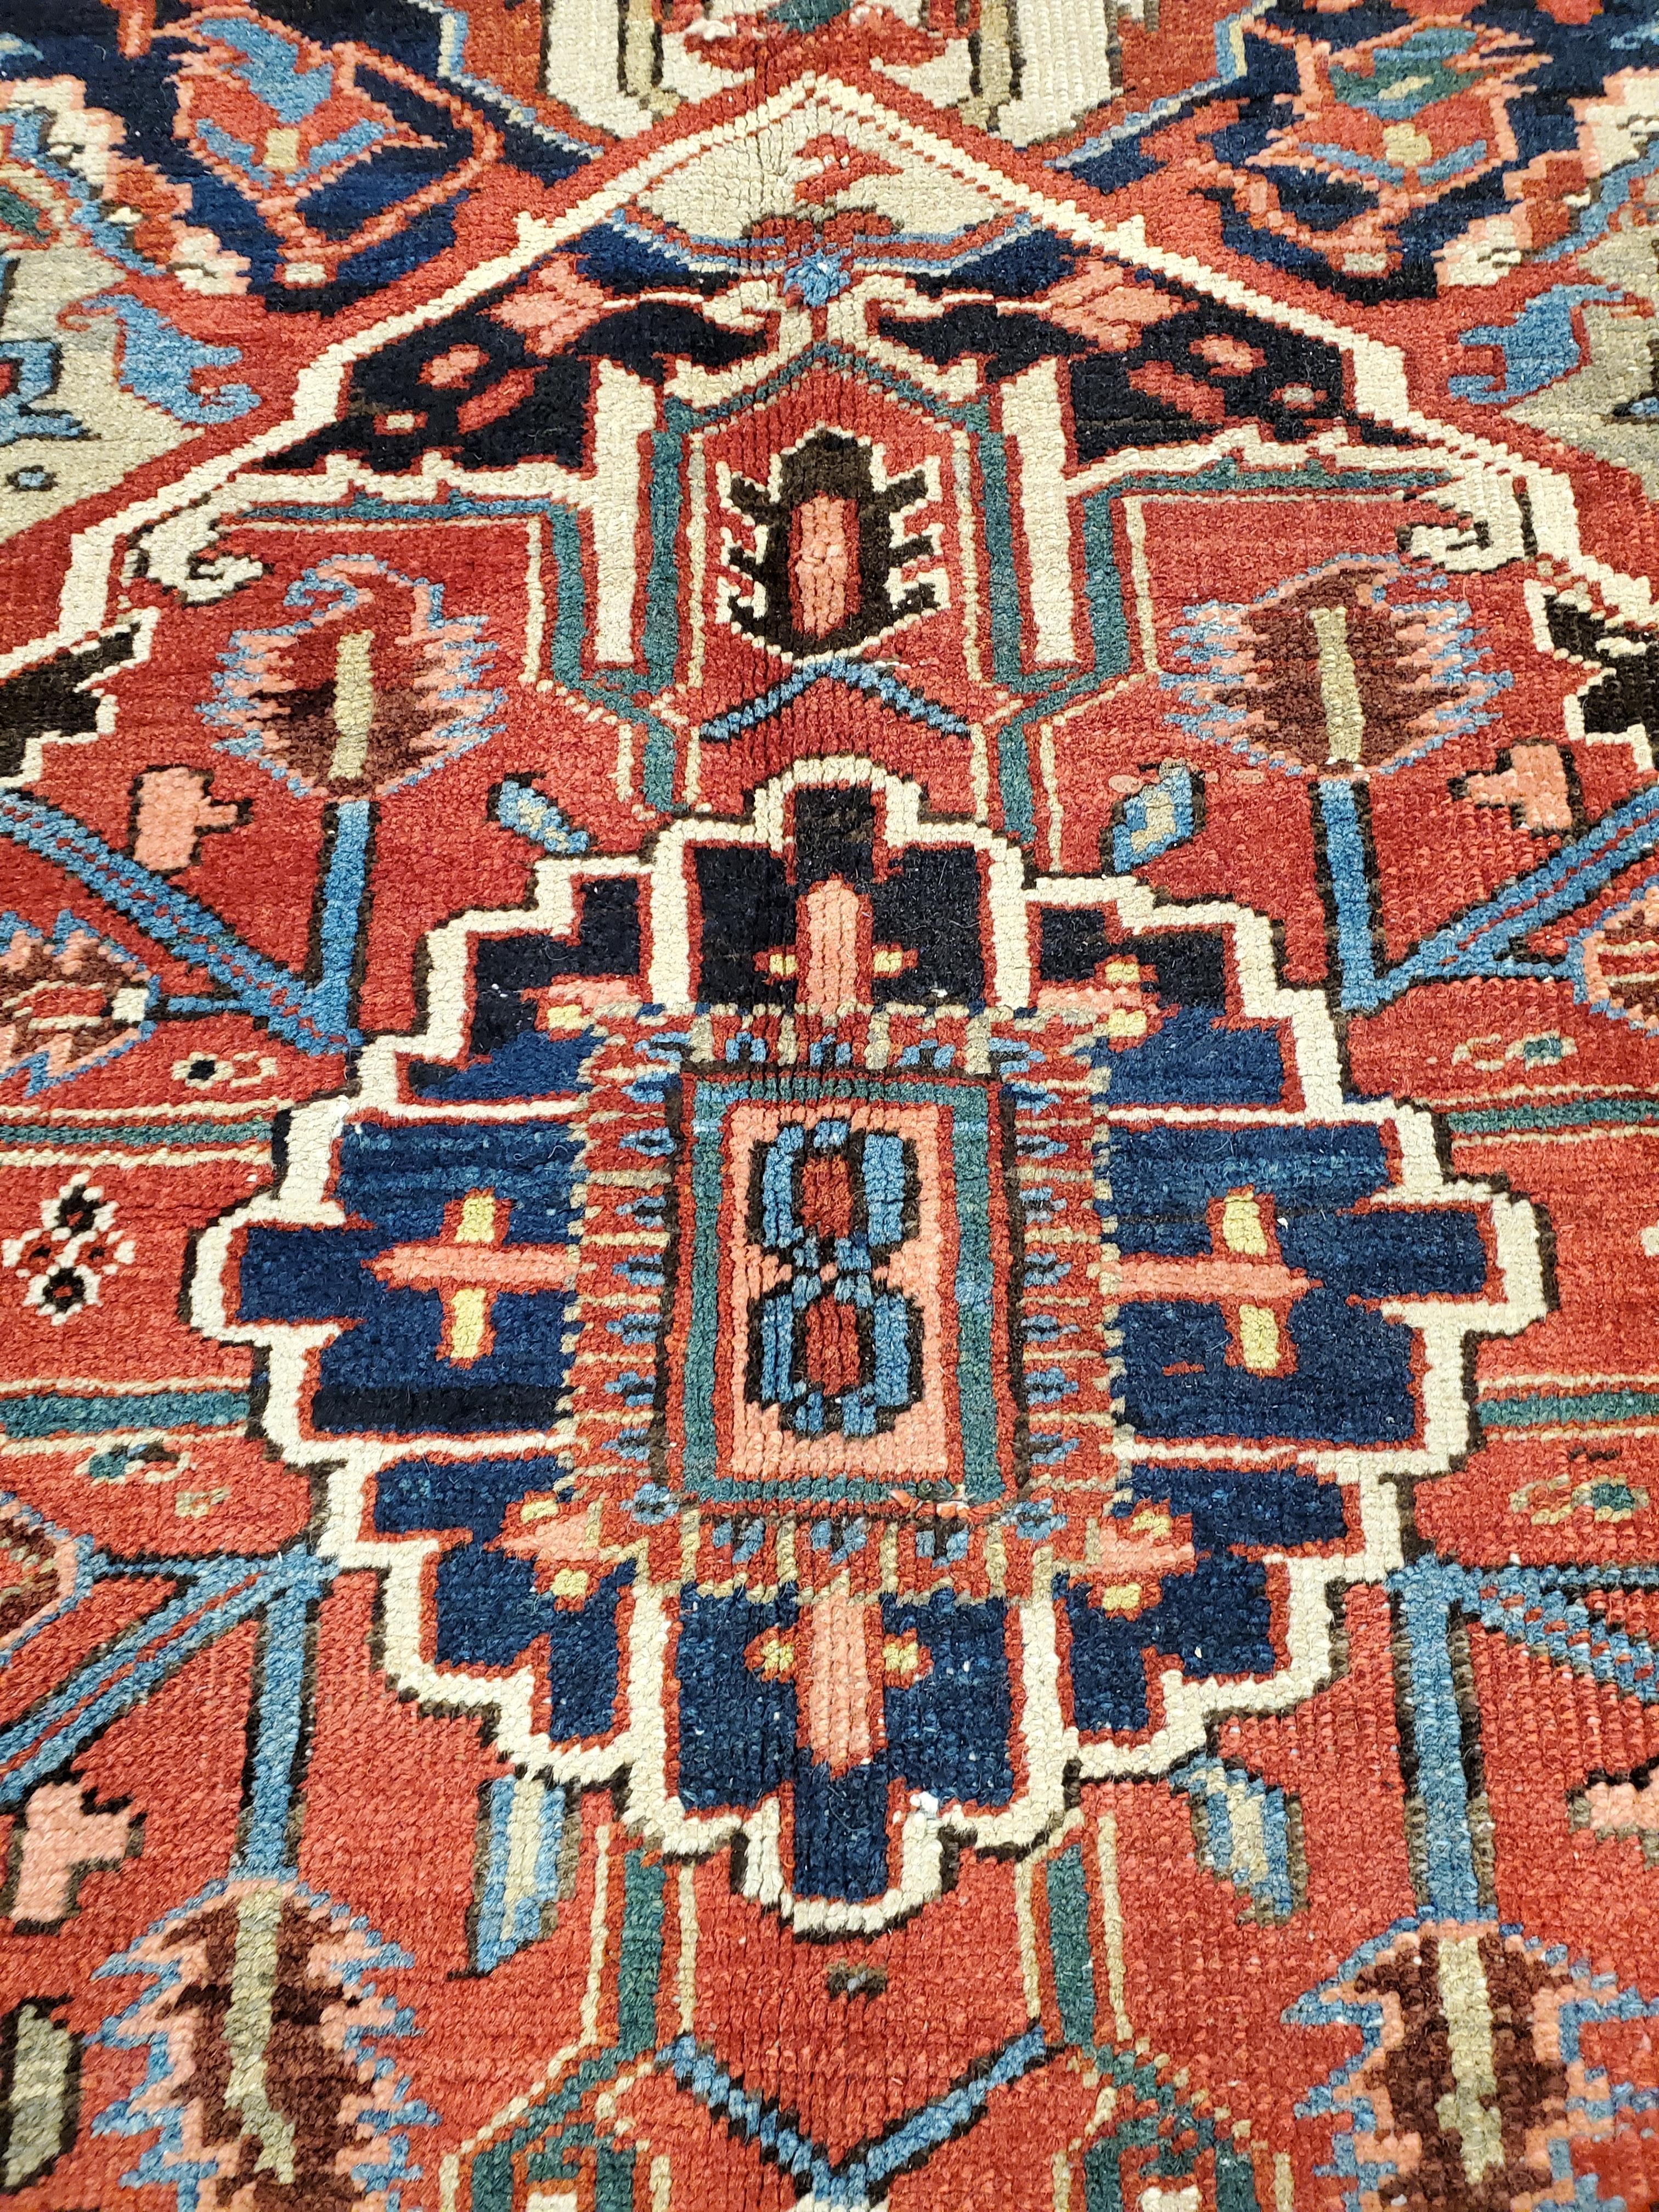 Antique Persian Heriz Carpet, Handmade Wool Oriental Rug, Rust, Navy, Lt Blue For Sale 2